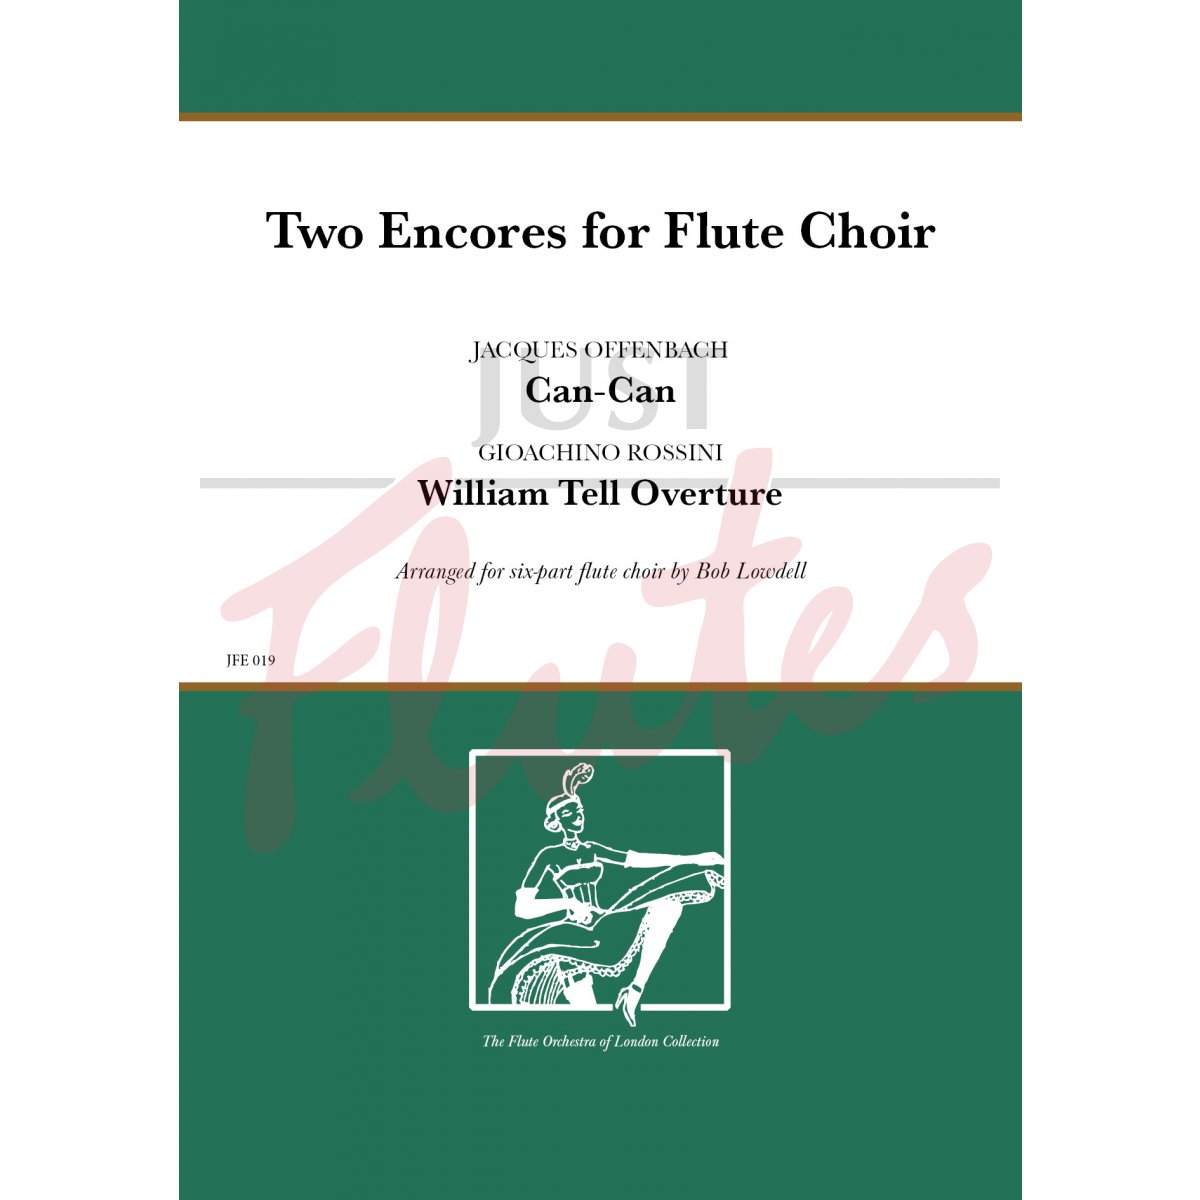 Two Encores for Flute Choir